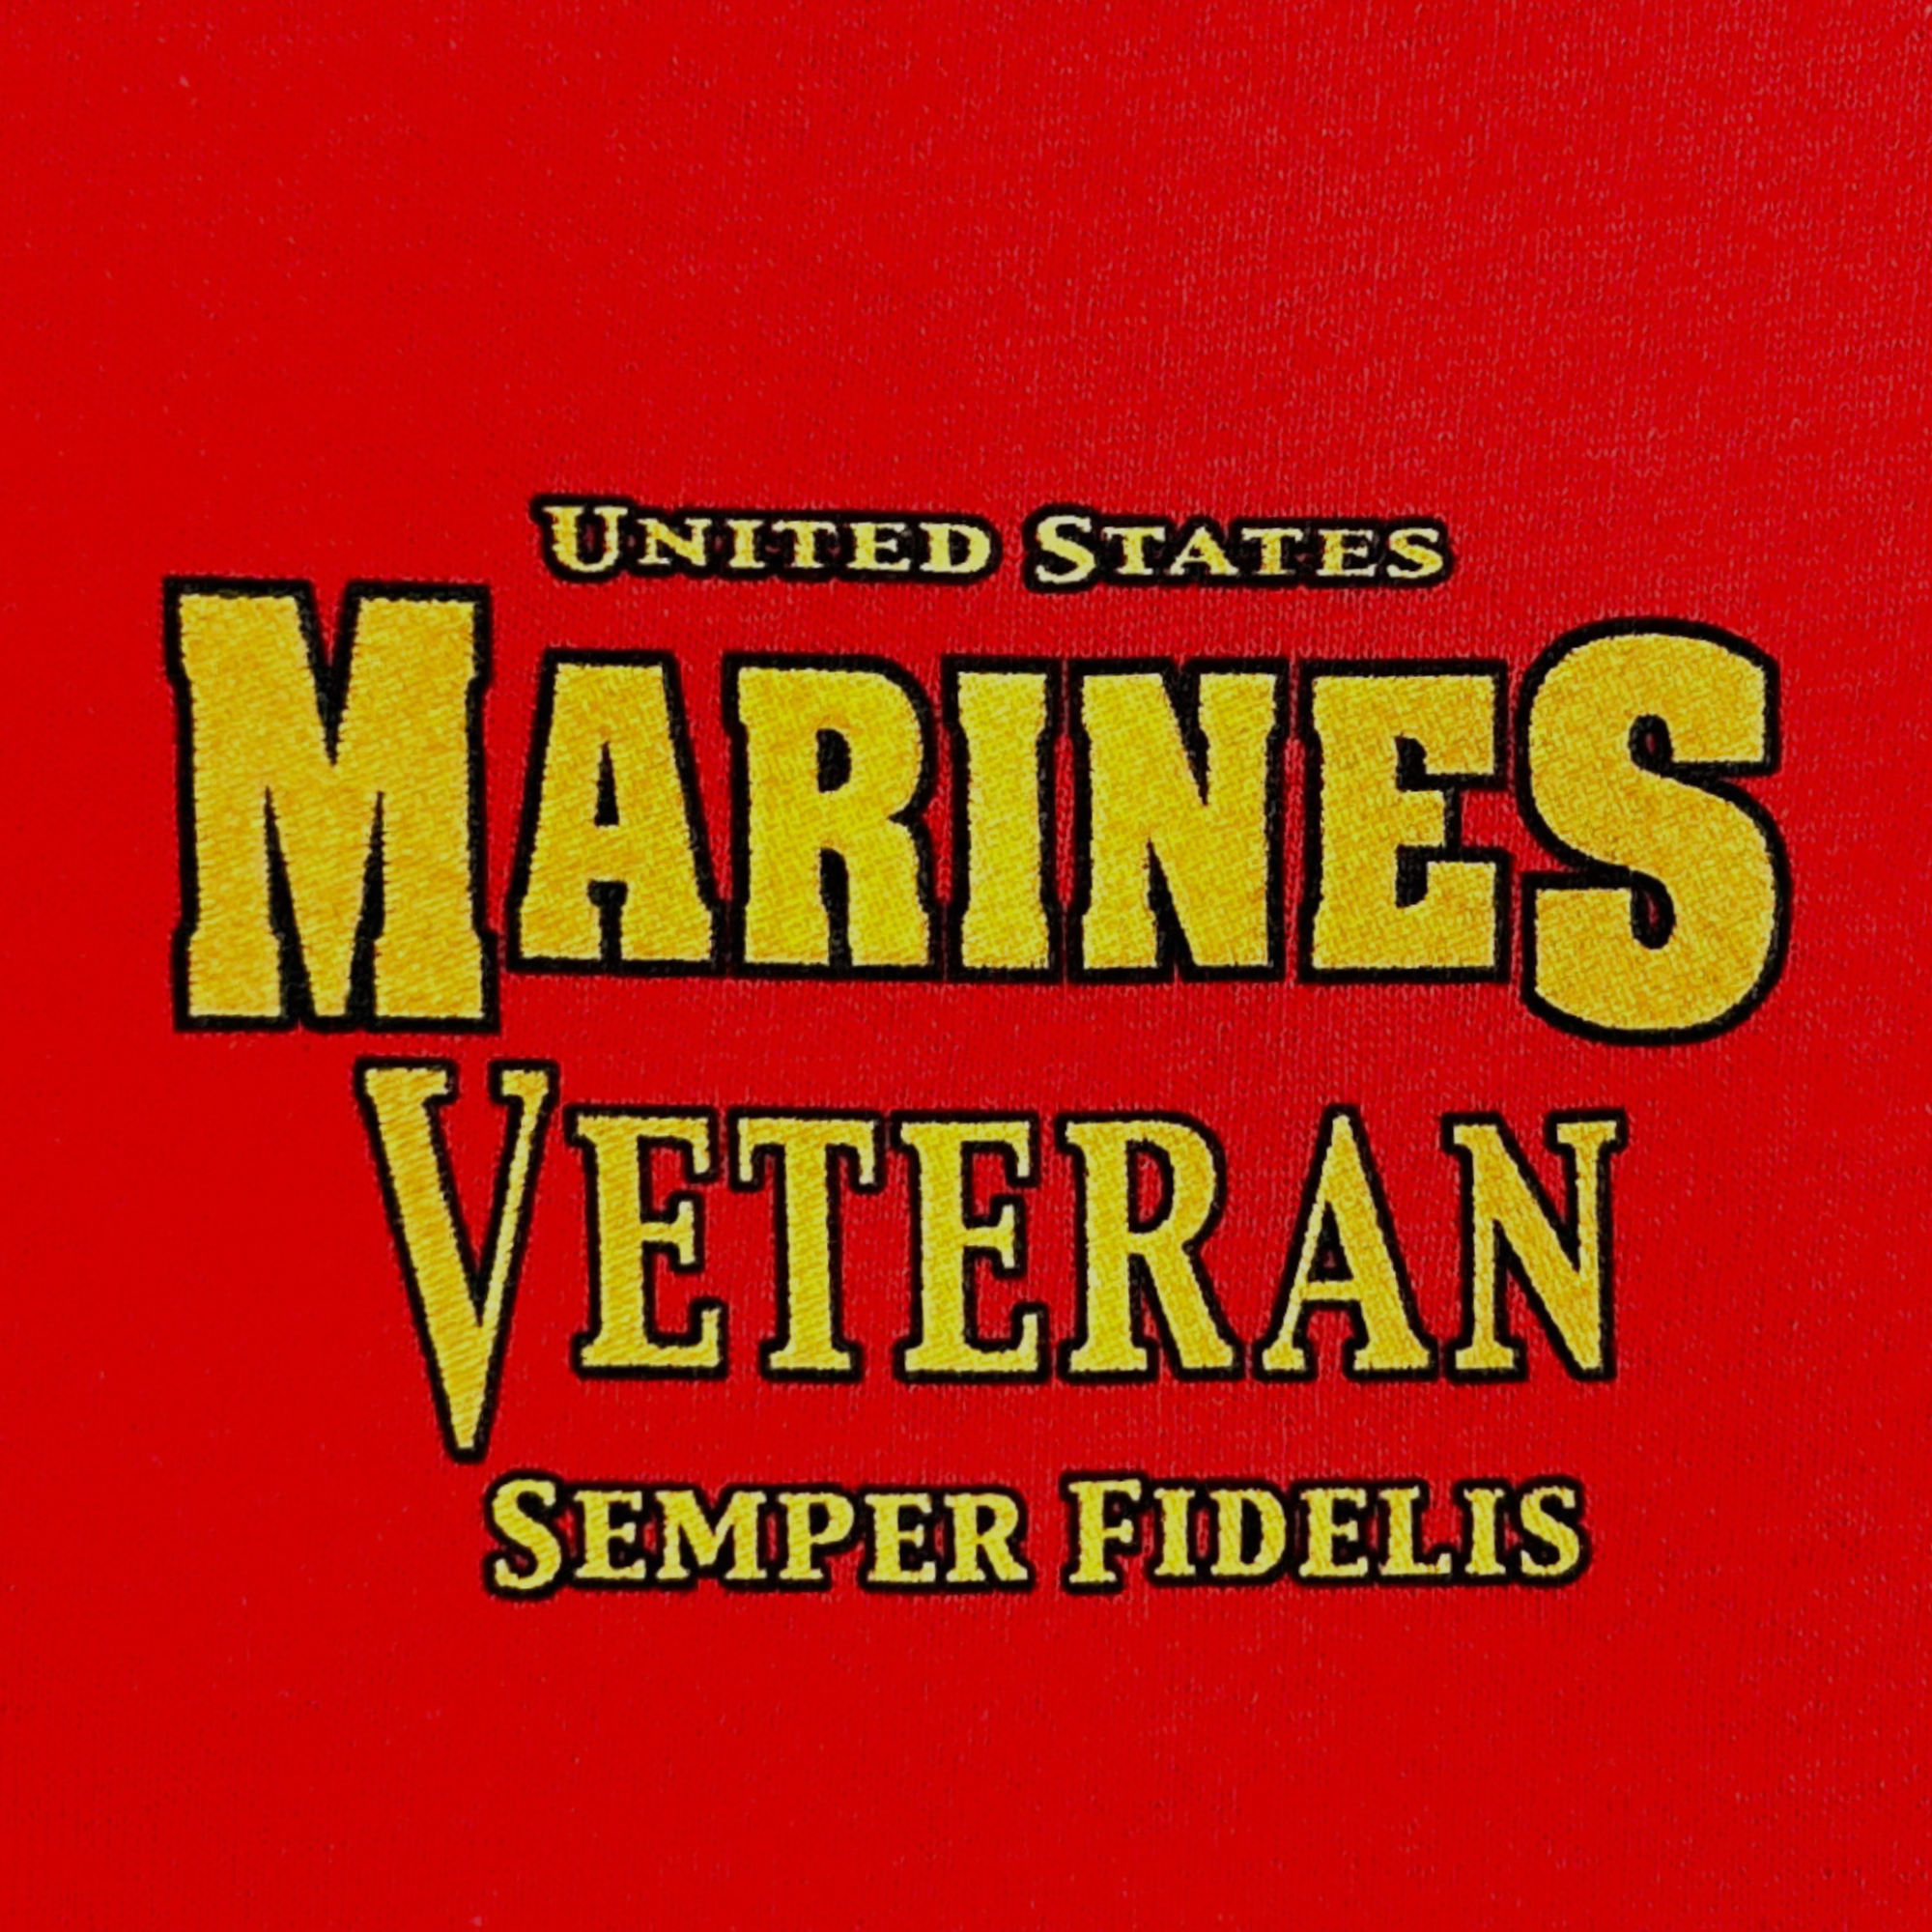 Marines Veteran Star Band T-Shirt (Red)